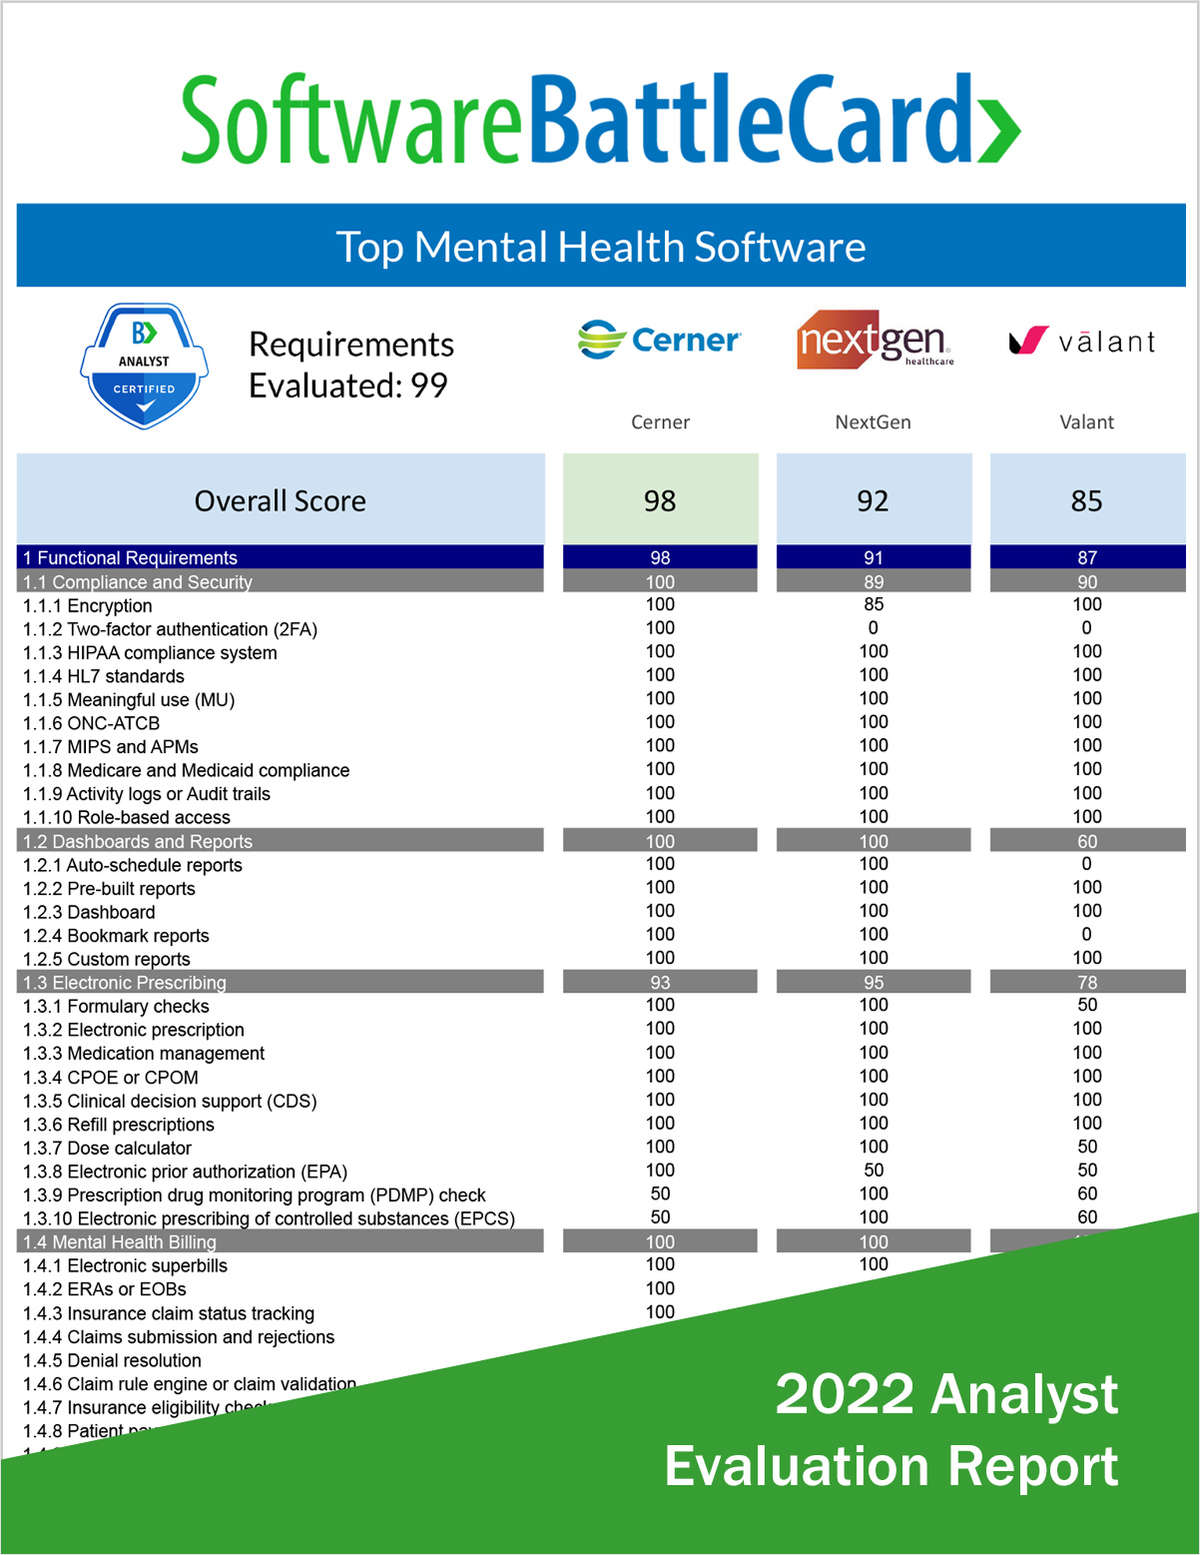 Top Mental Health Software BattleCard--Cerner vs. NextGen vs. Valant